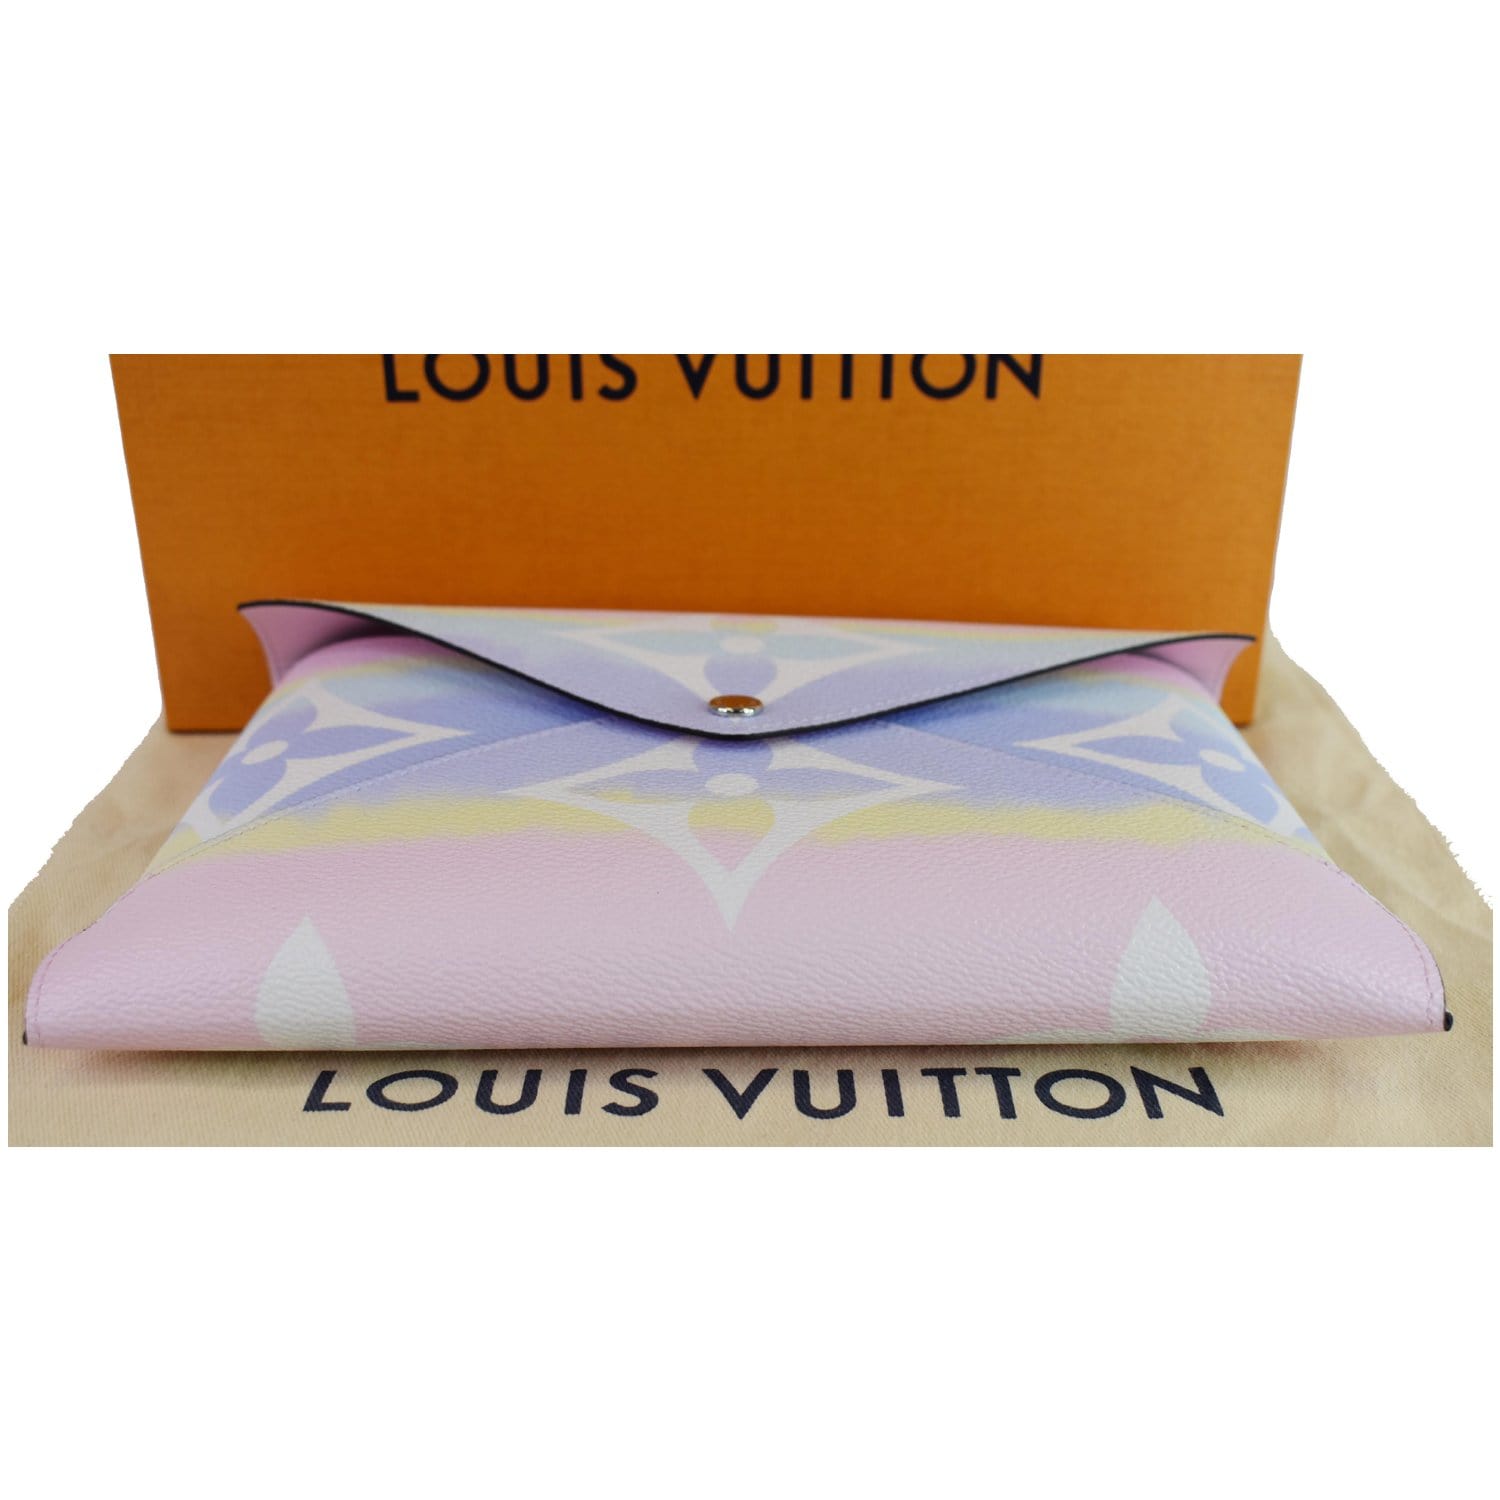 Louis Vuitton - Authenticated Kirigami Purse - Khaki for Women, Never Worn